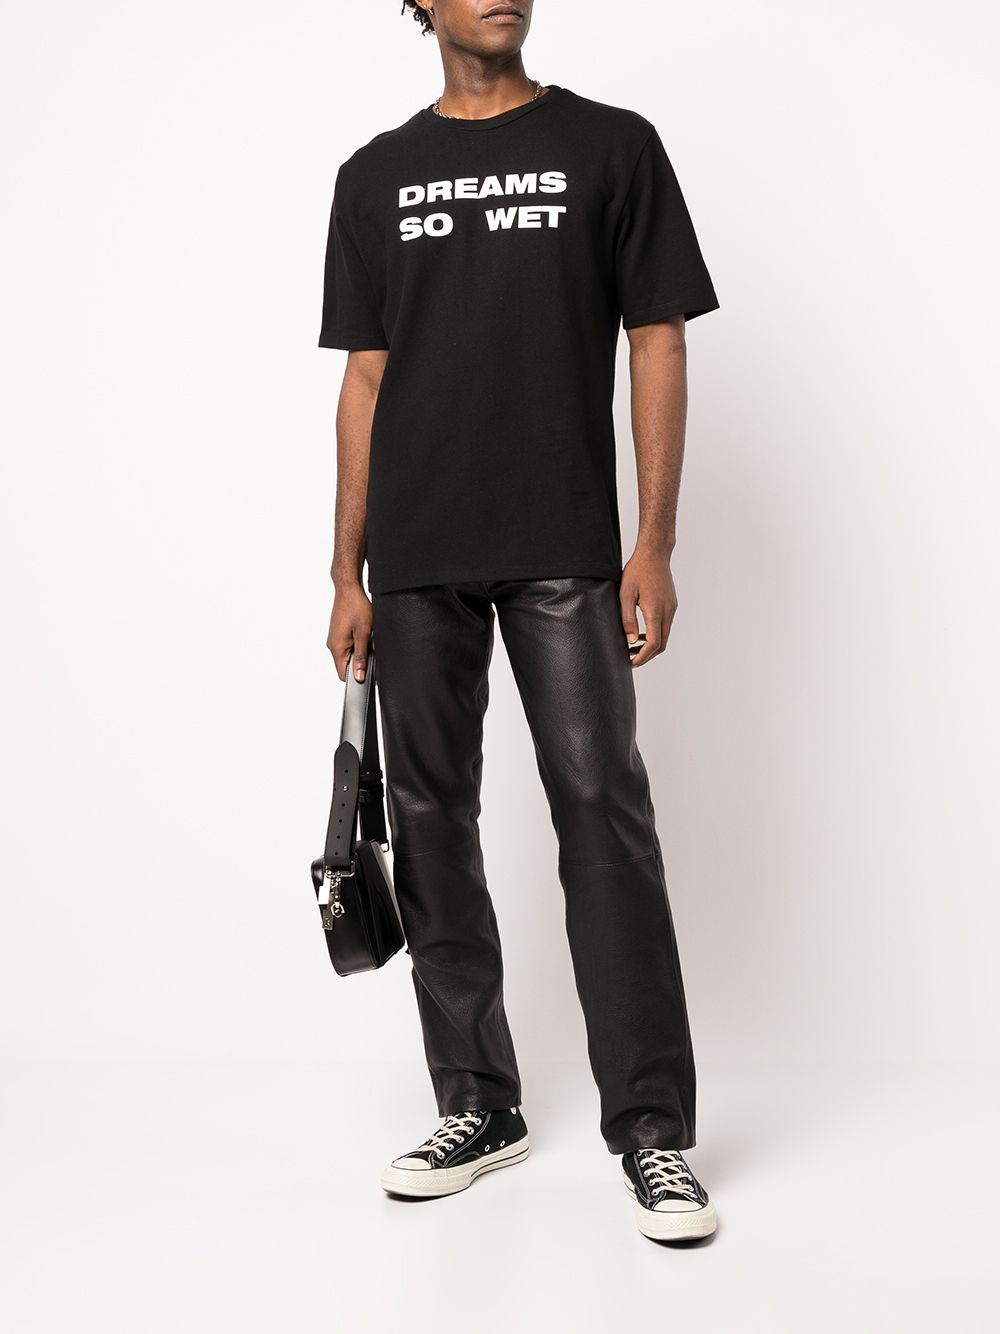 фото Liberal youth ministry футболка с надписью dreams so wet